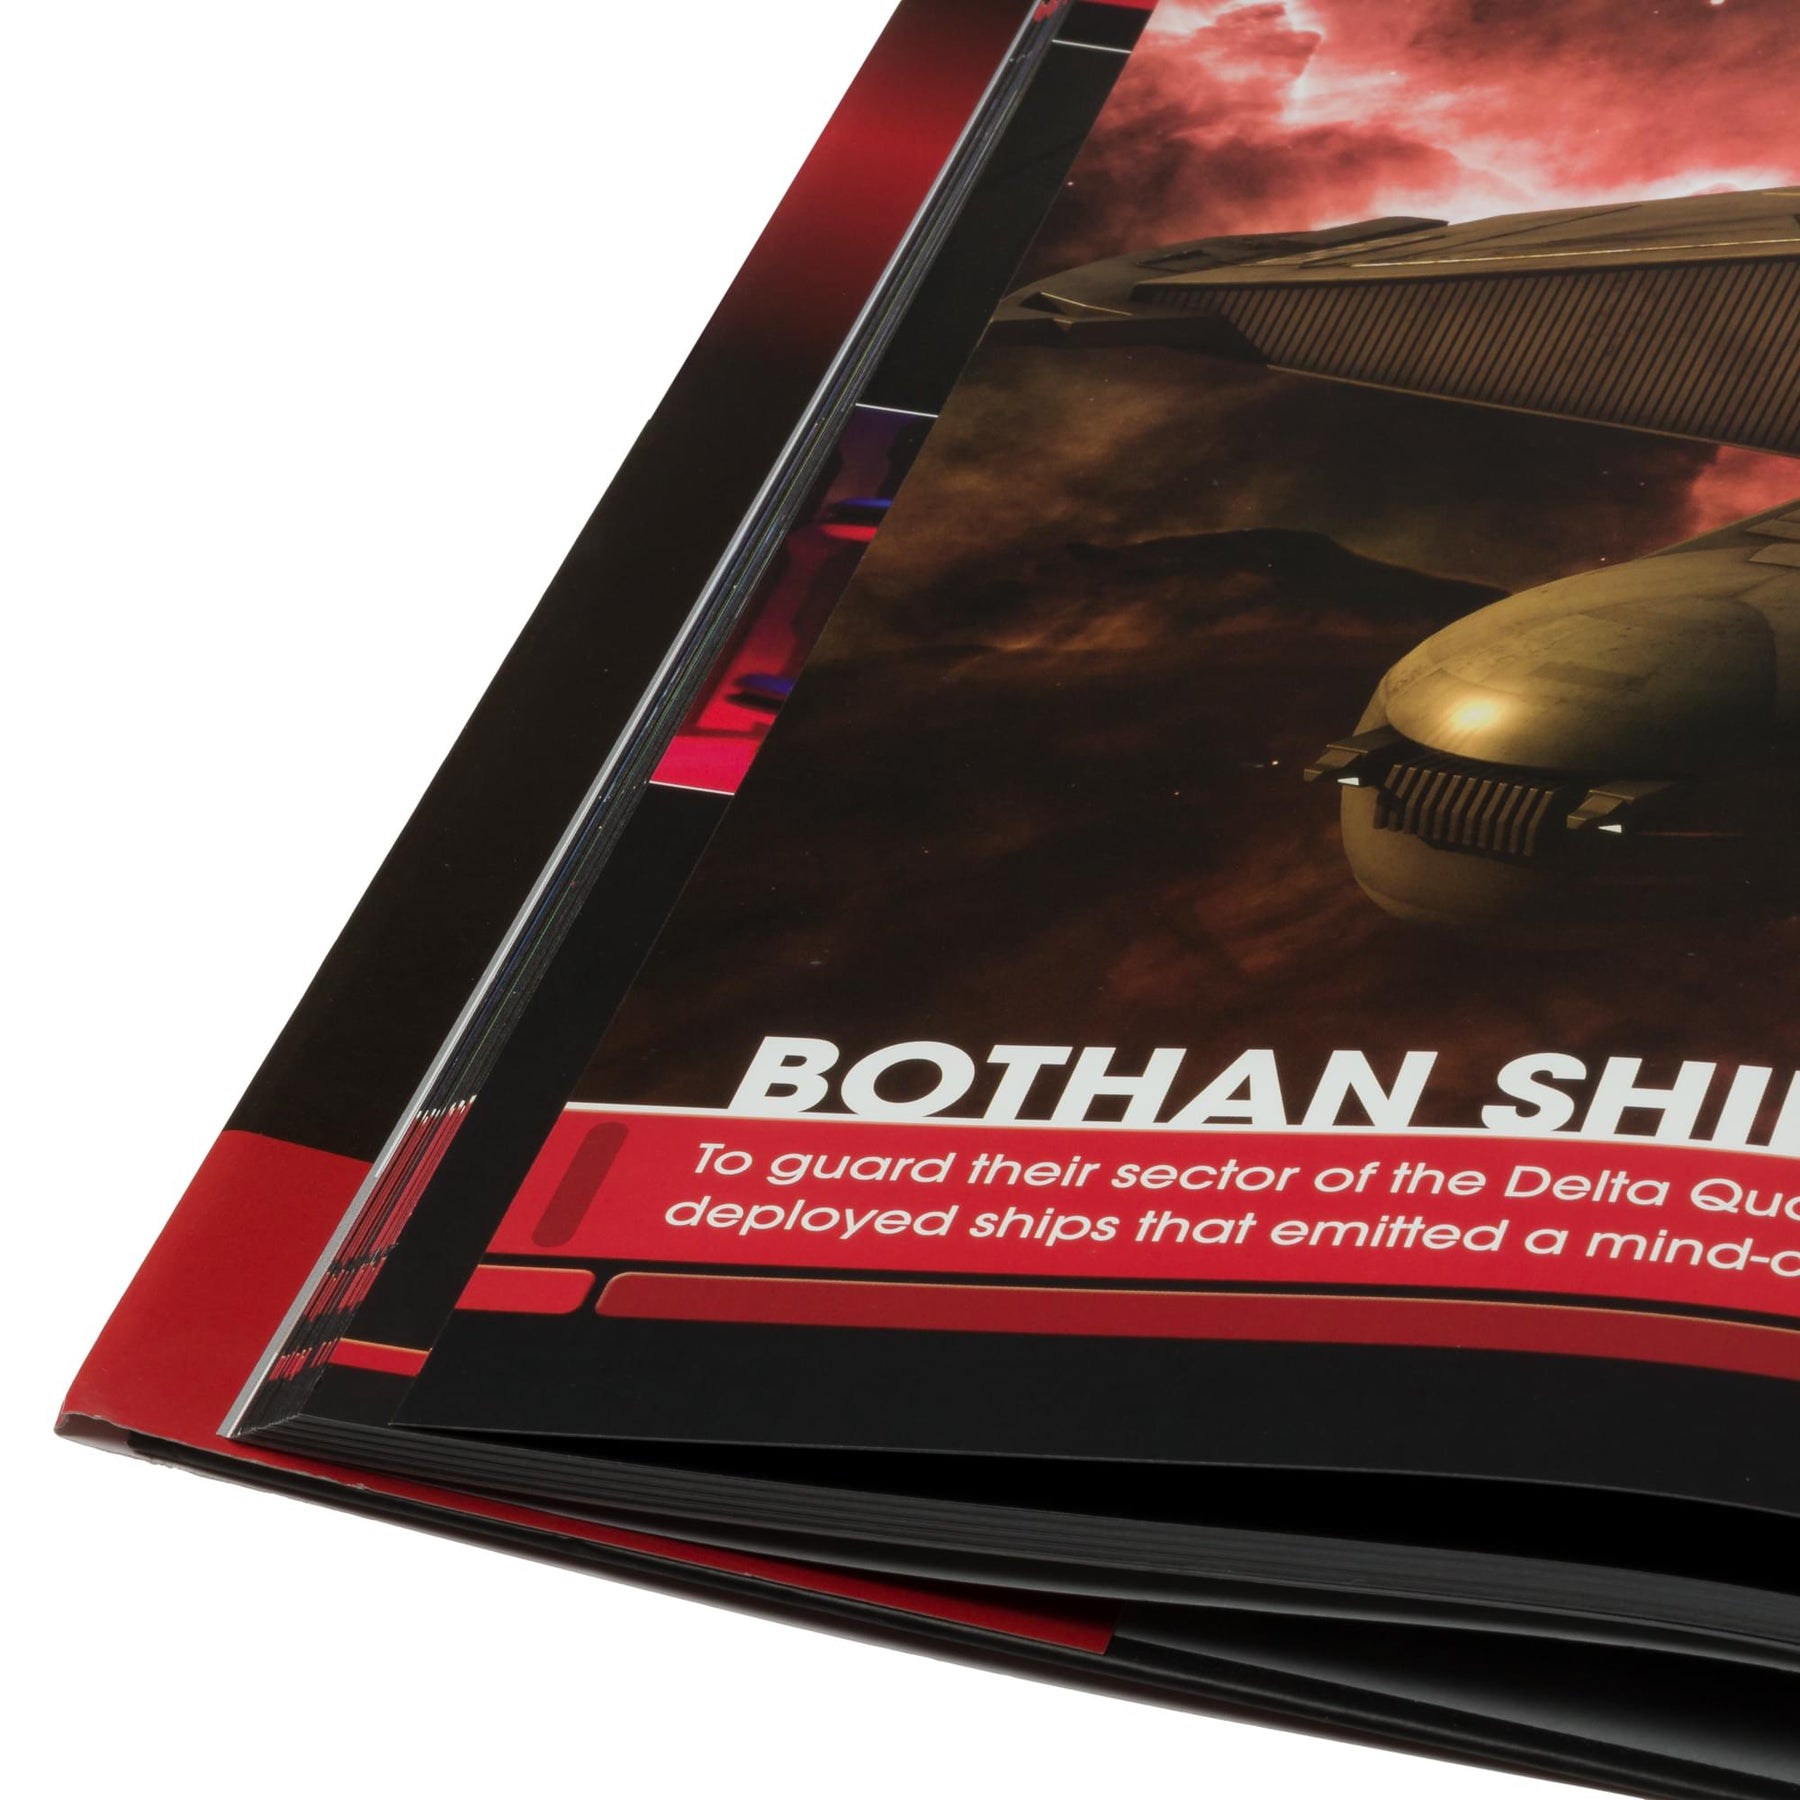 Star Trek Shipyards Book | The Borg and the Delta Quadrant Vol 1 A-K